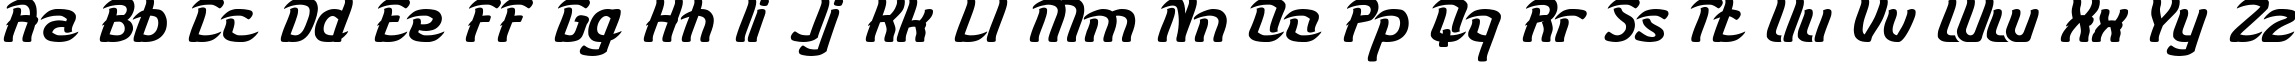 Пример написания английского алфавита шрифтом KARATE-light